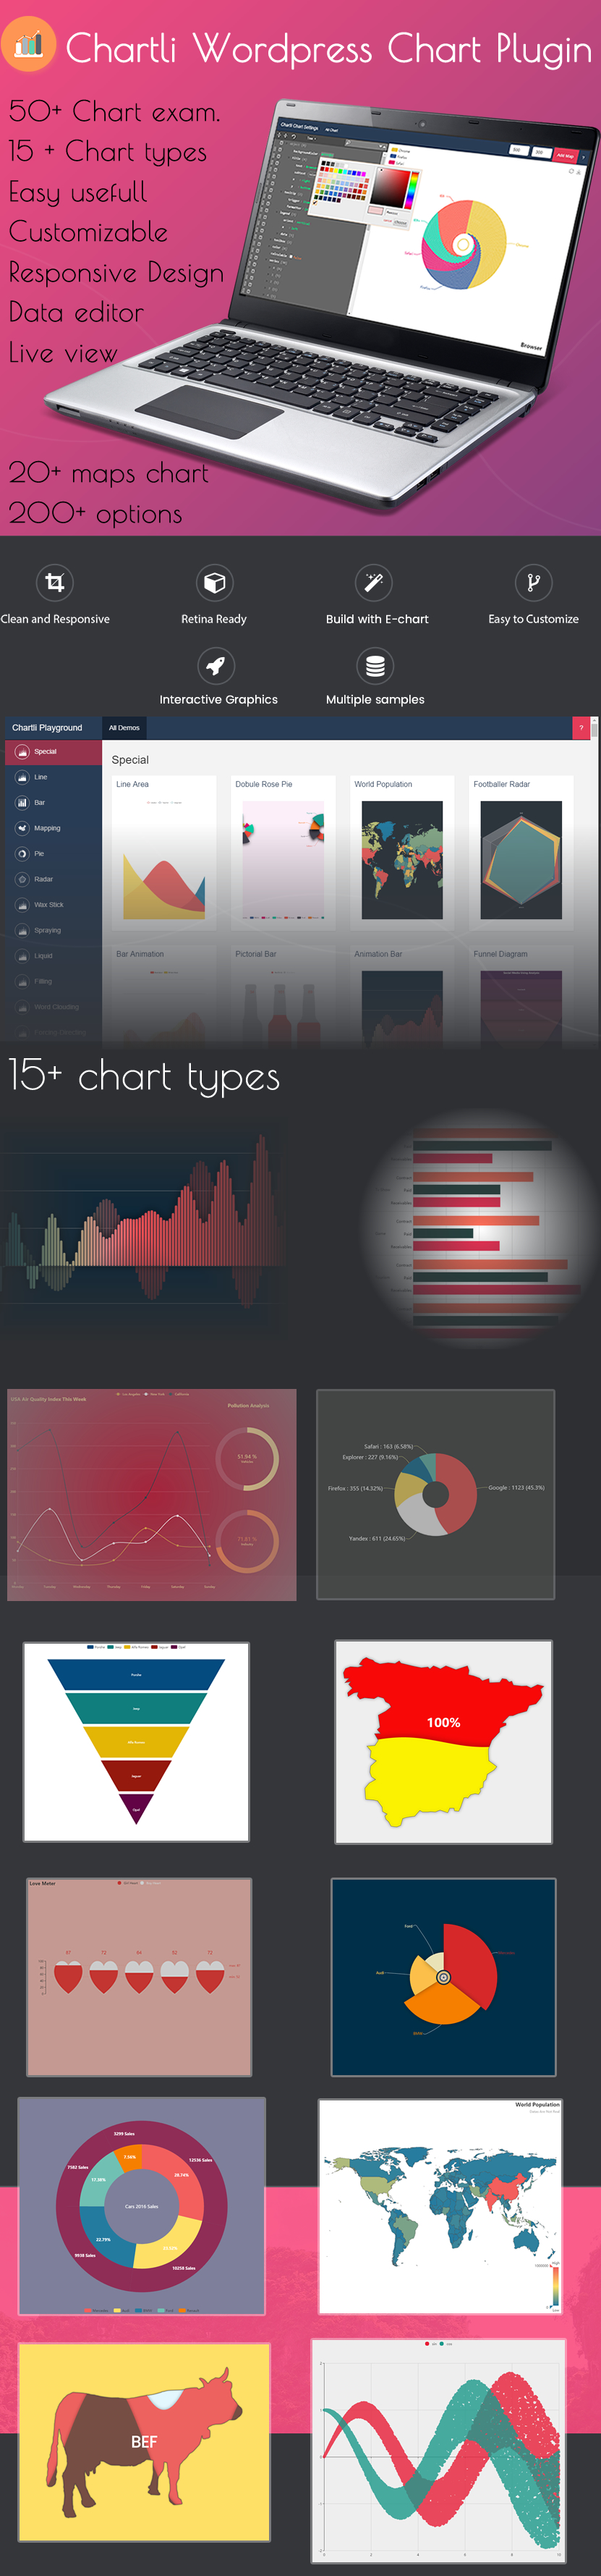 Chartli WordPress Interactive Chart Plugin - 2